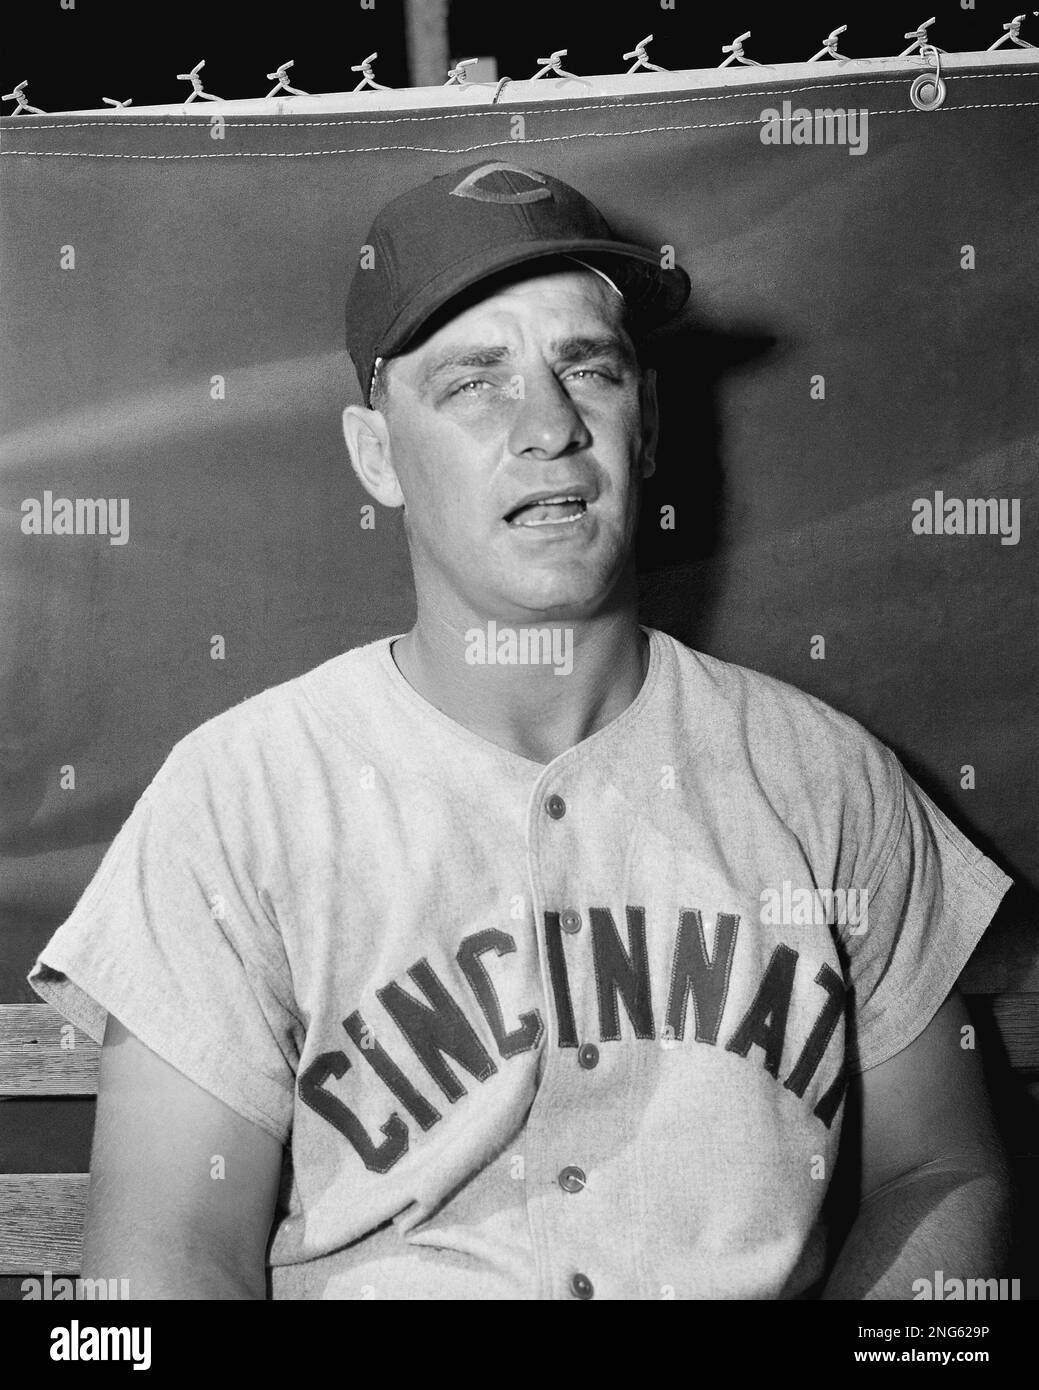 Ted Kluszewski, infielder with the Cincinnati Reds baseball team shown  March 1955. (AP Photo Stock Photo - Alamy